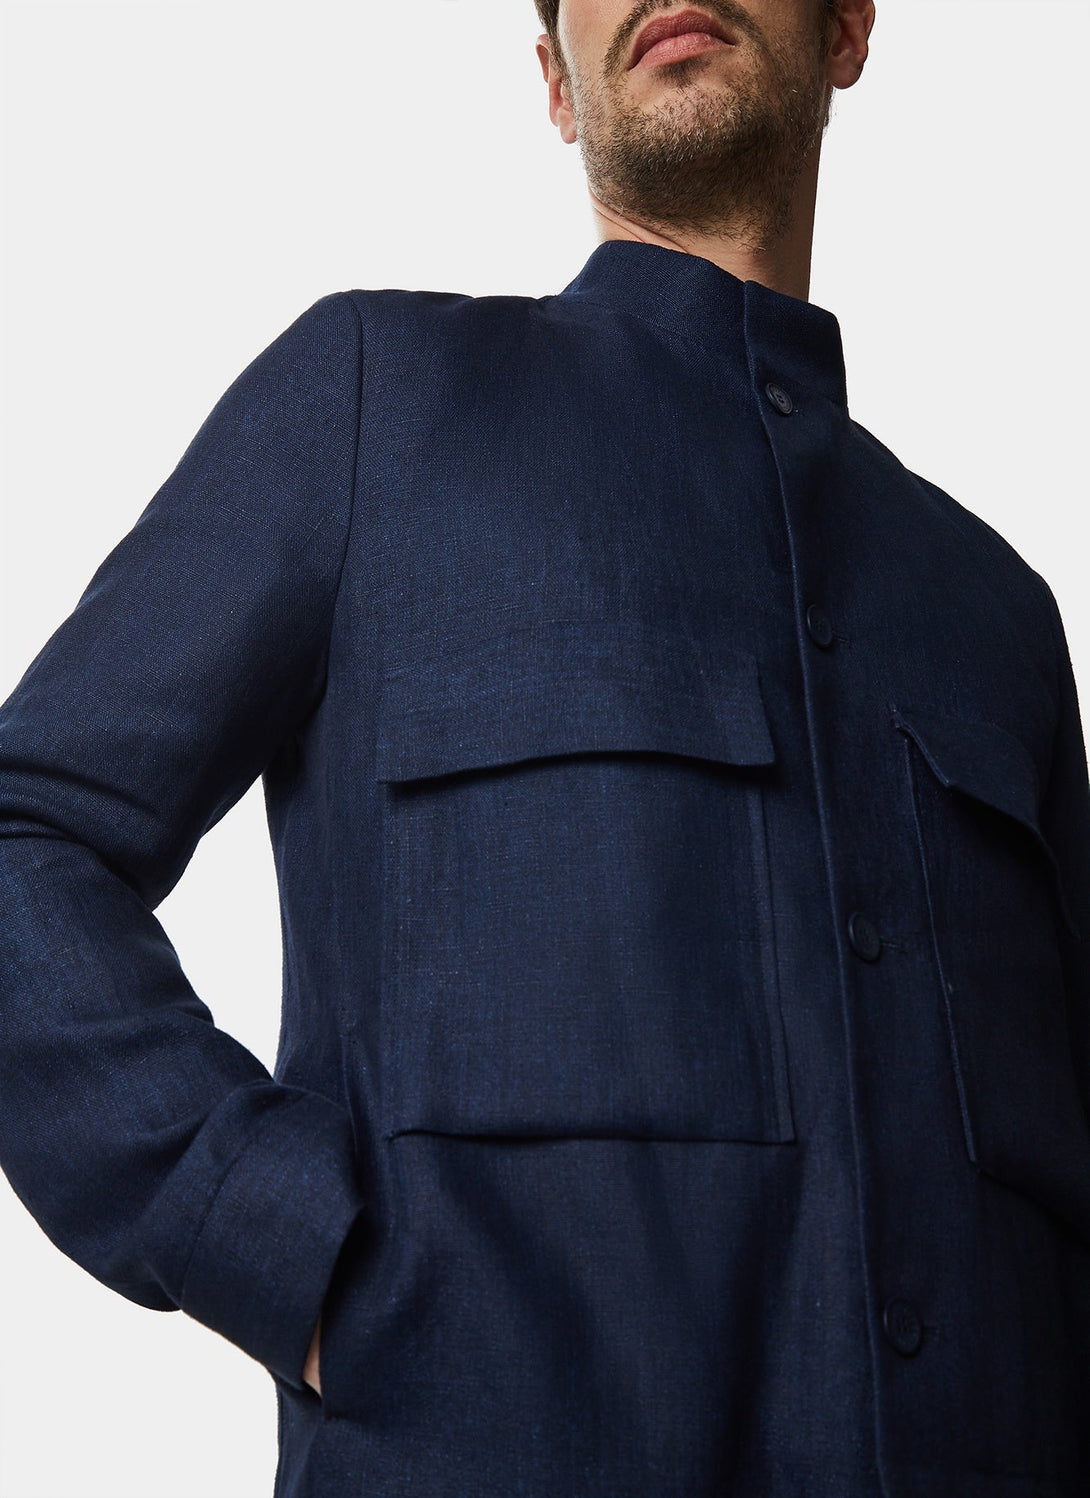 Men Overshirt | Navy Blue Linen Overshirt With Mandarin Colla by Spanish designer Adolfo Dominguez